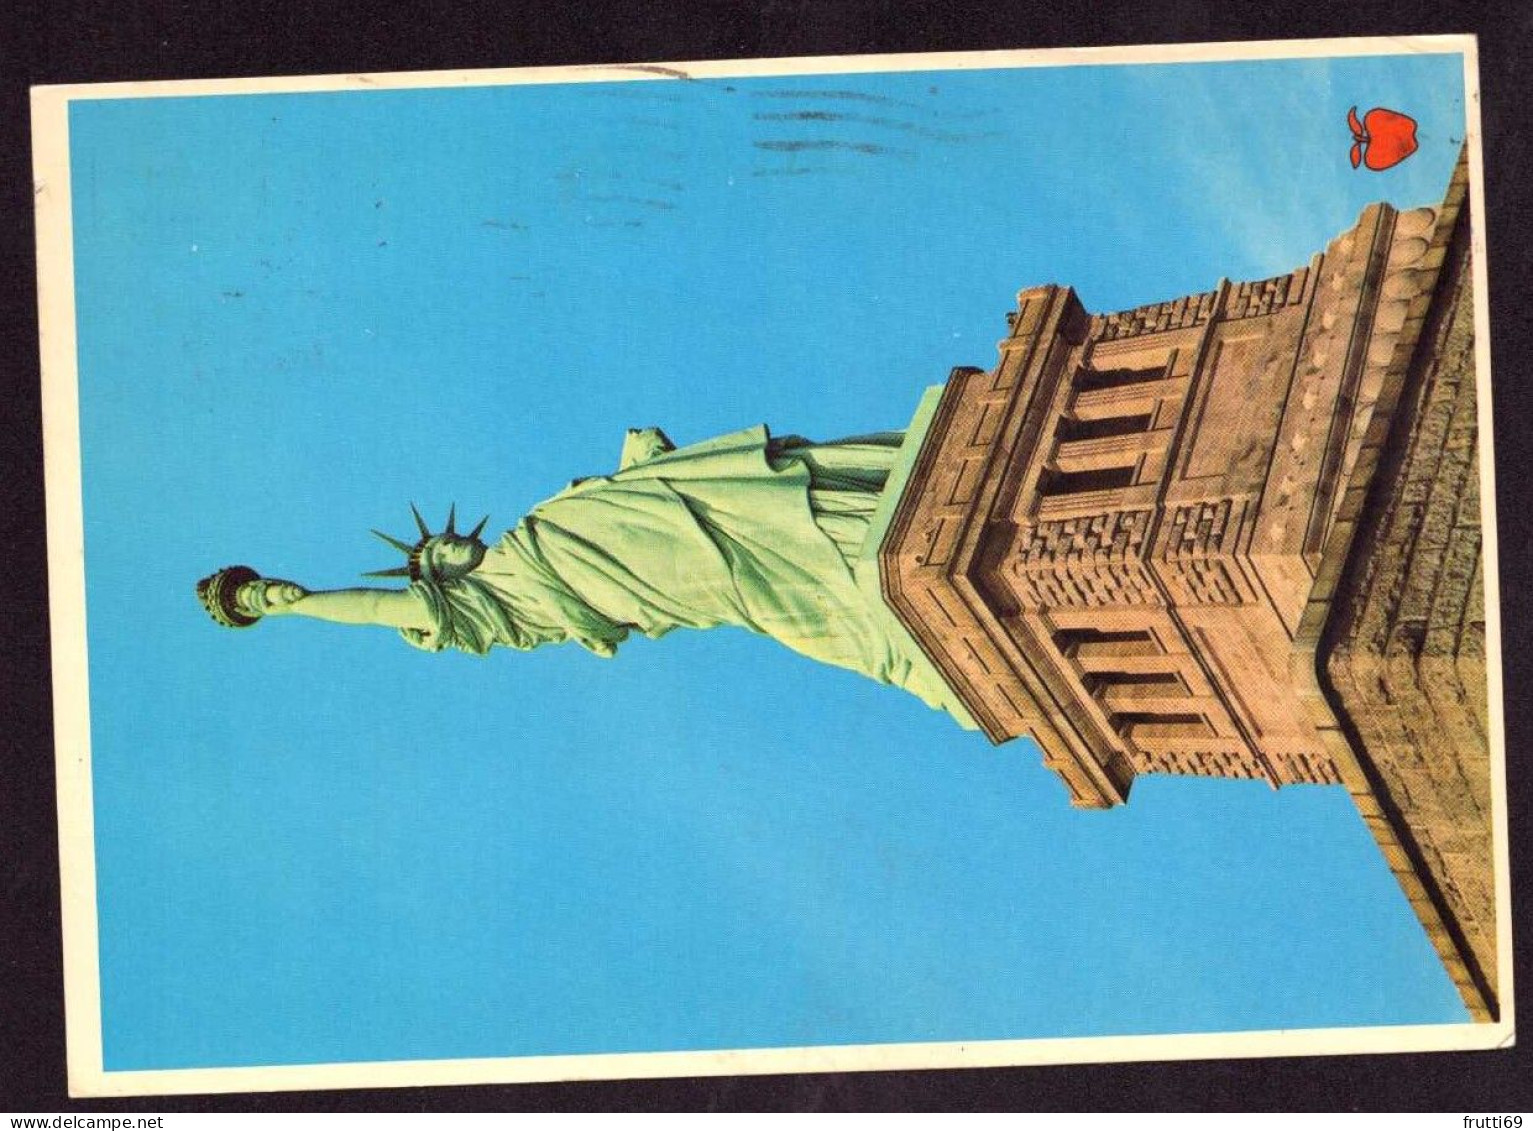 AK 127459 USA - New York City - Statue Of Liberty - Freiheitsstatue